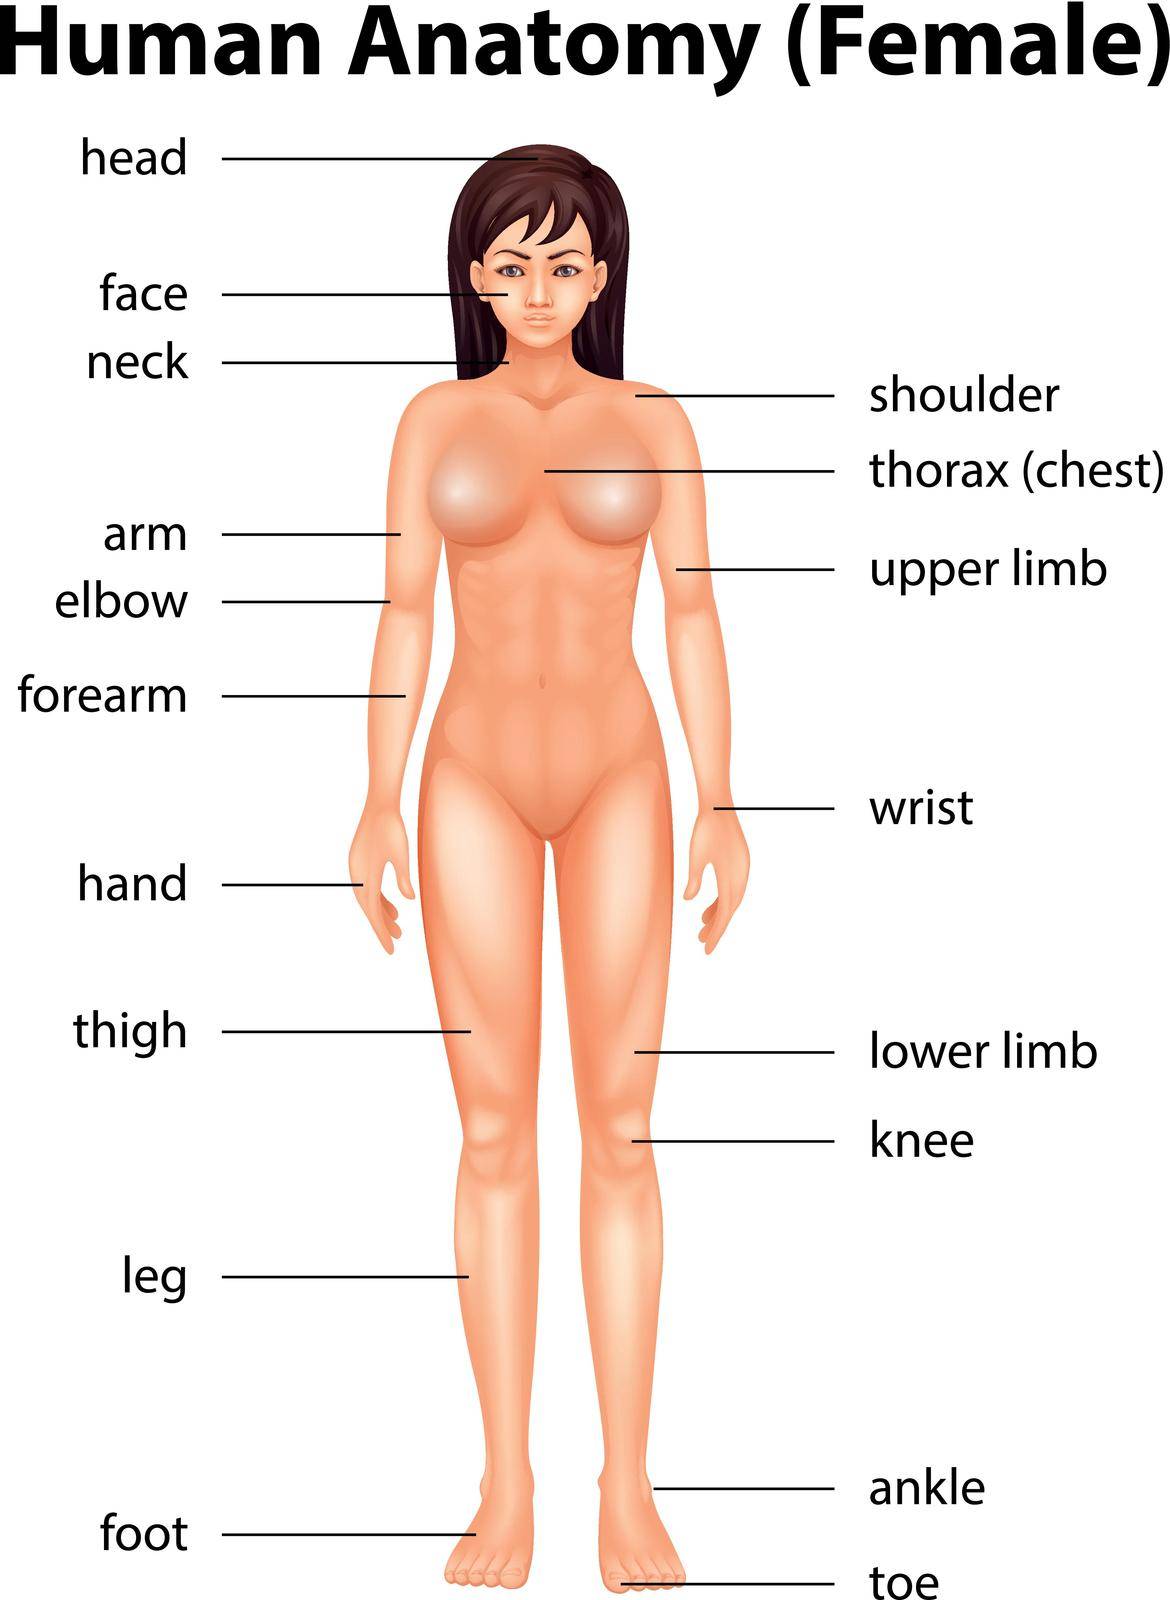 Illustration of human body parts